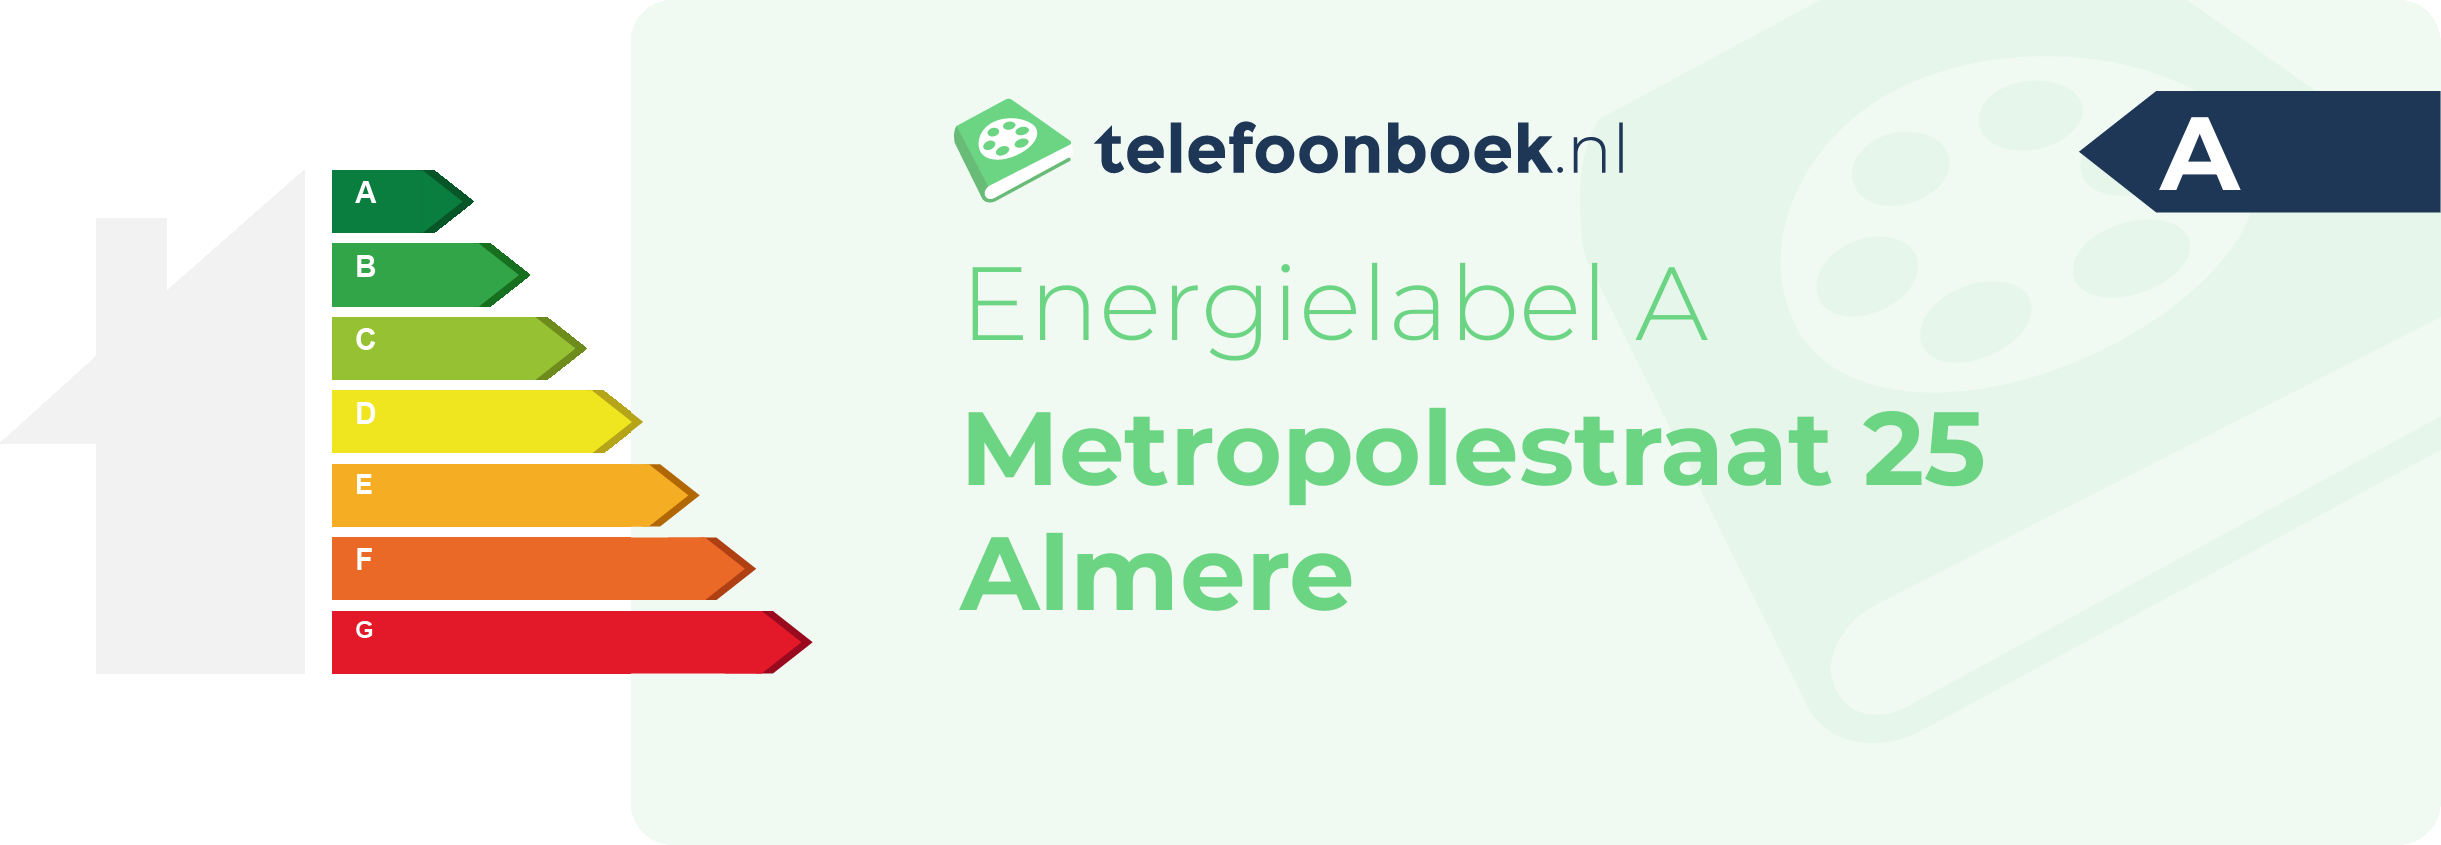 Energielabel Metropolestraat 25 Almere